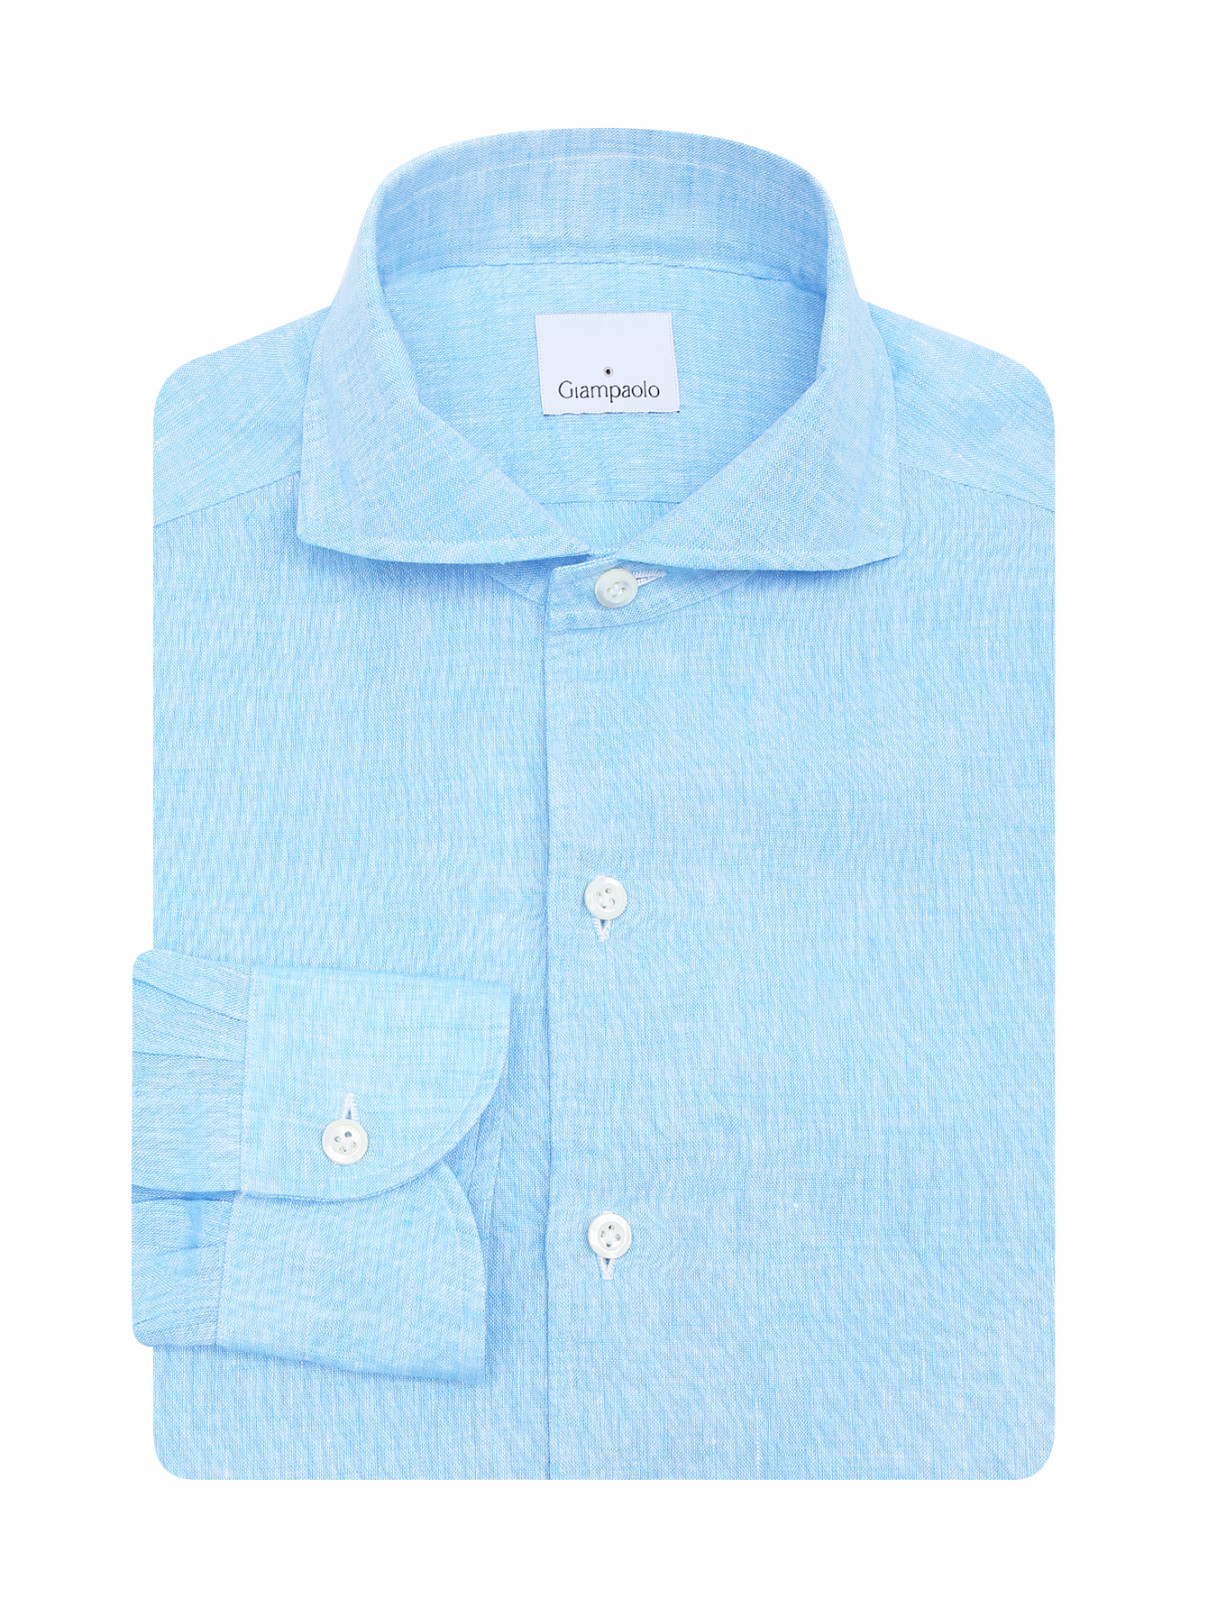 Рубашка изо льна на пуговицах Giampaolo  –  Общий вид  – Цвет:  Синий